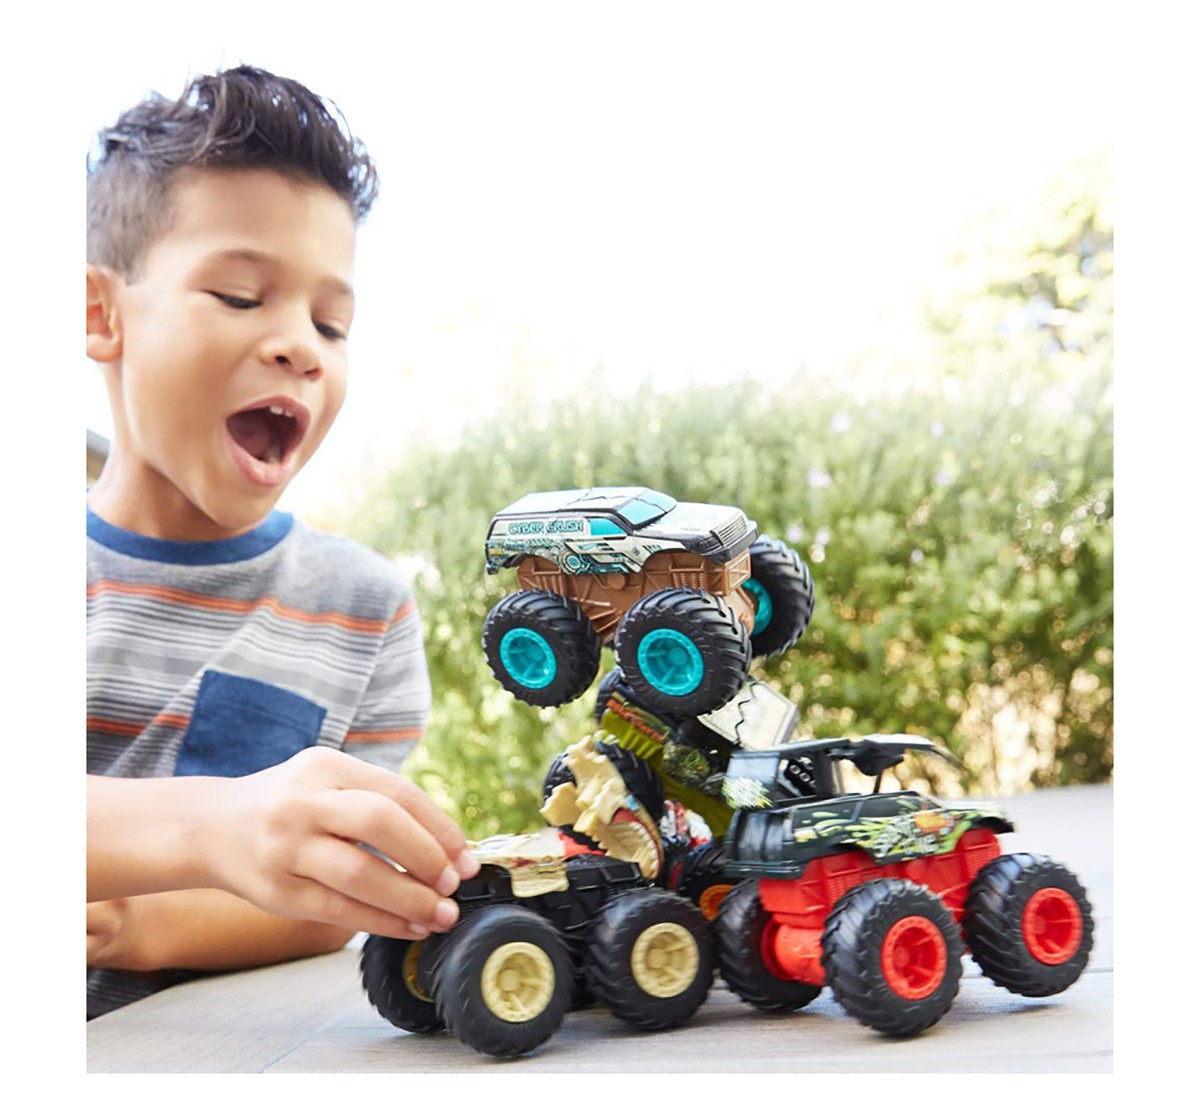 Hot Wheels Monster Trucks 1:43 Bash Ups Vehicles for Kids age 3Y+ 